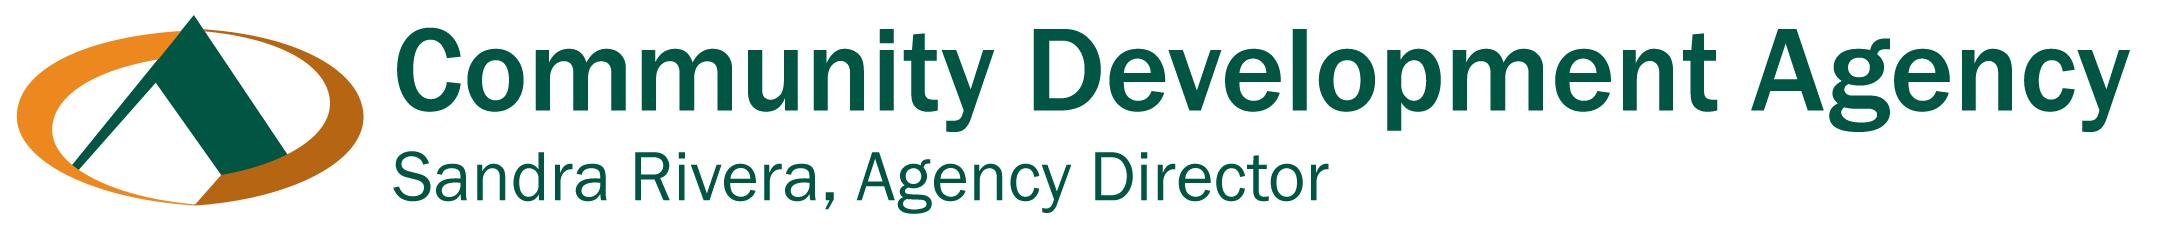 Community Development Agency